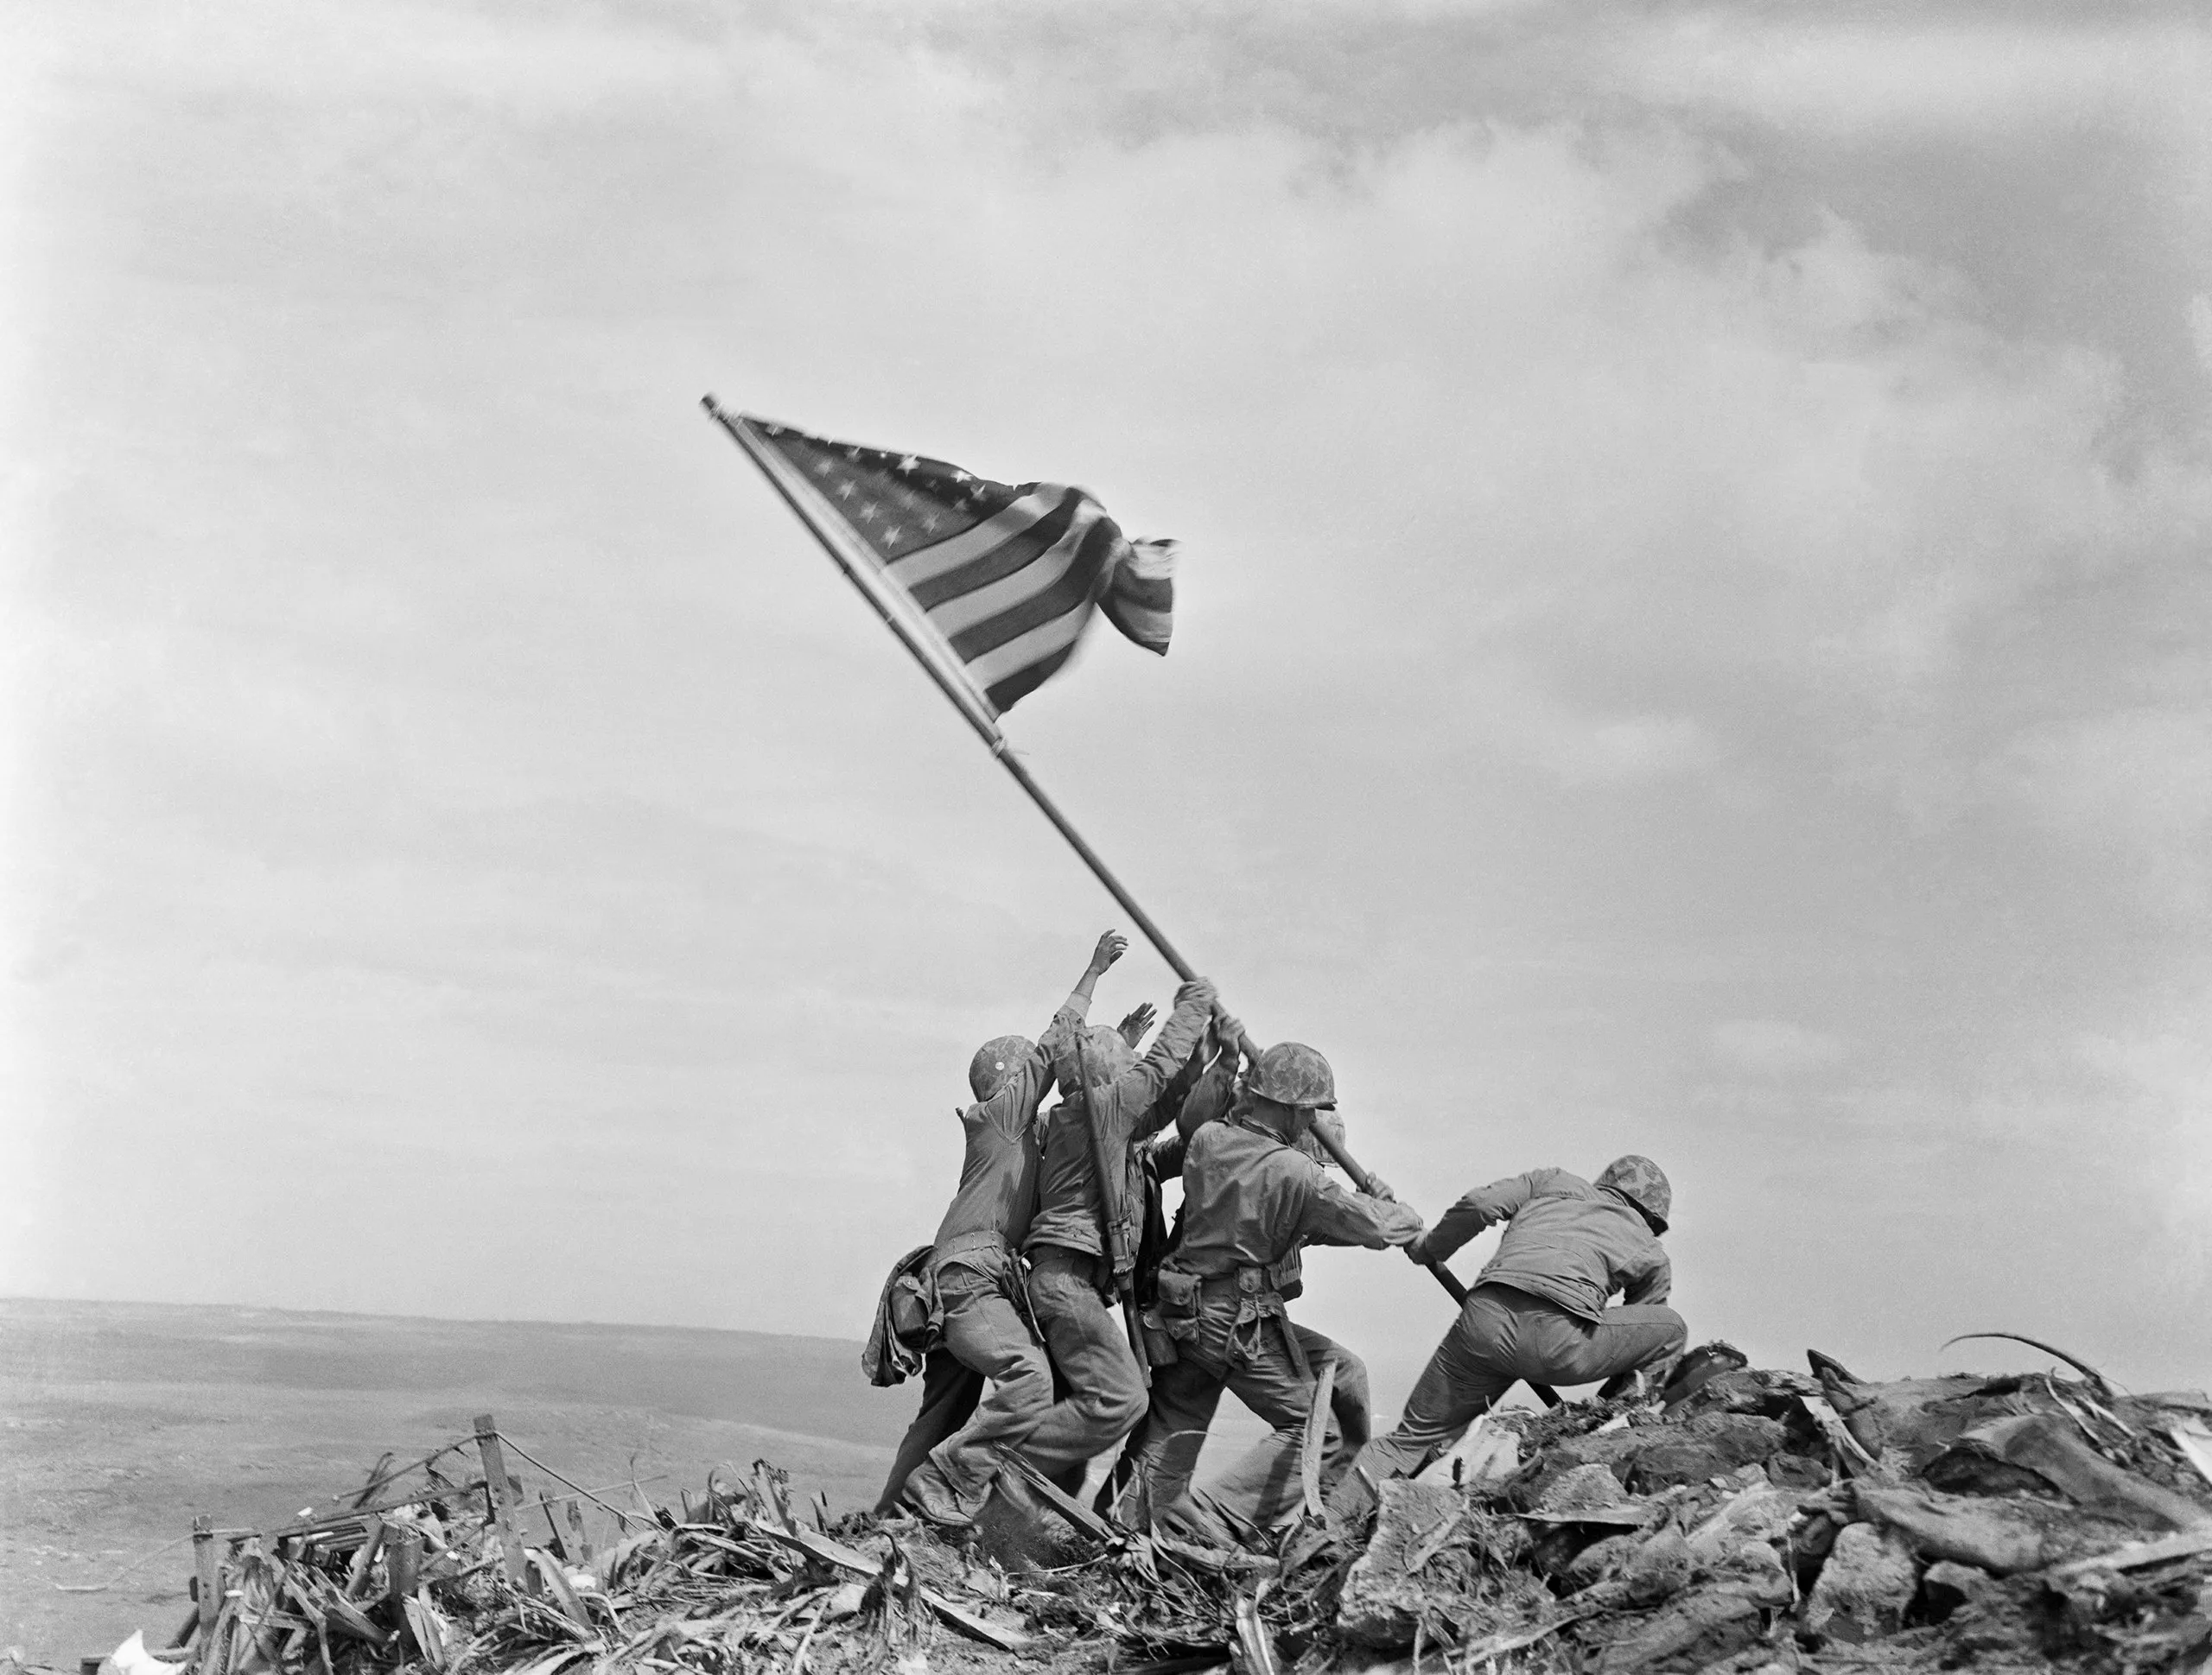 A black and white photo of Raising the Flag on Iwo Jima